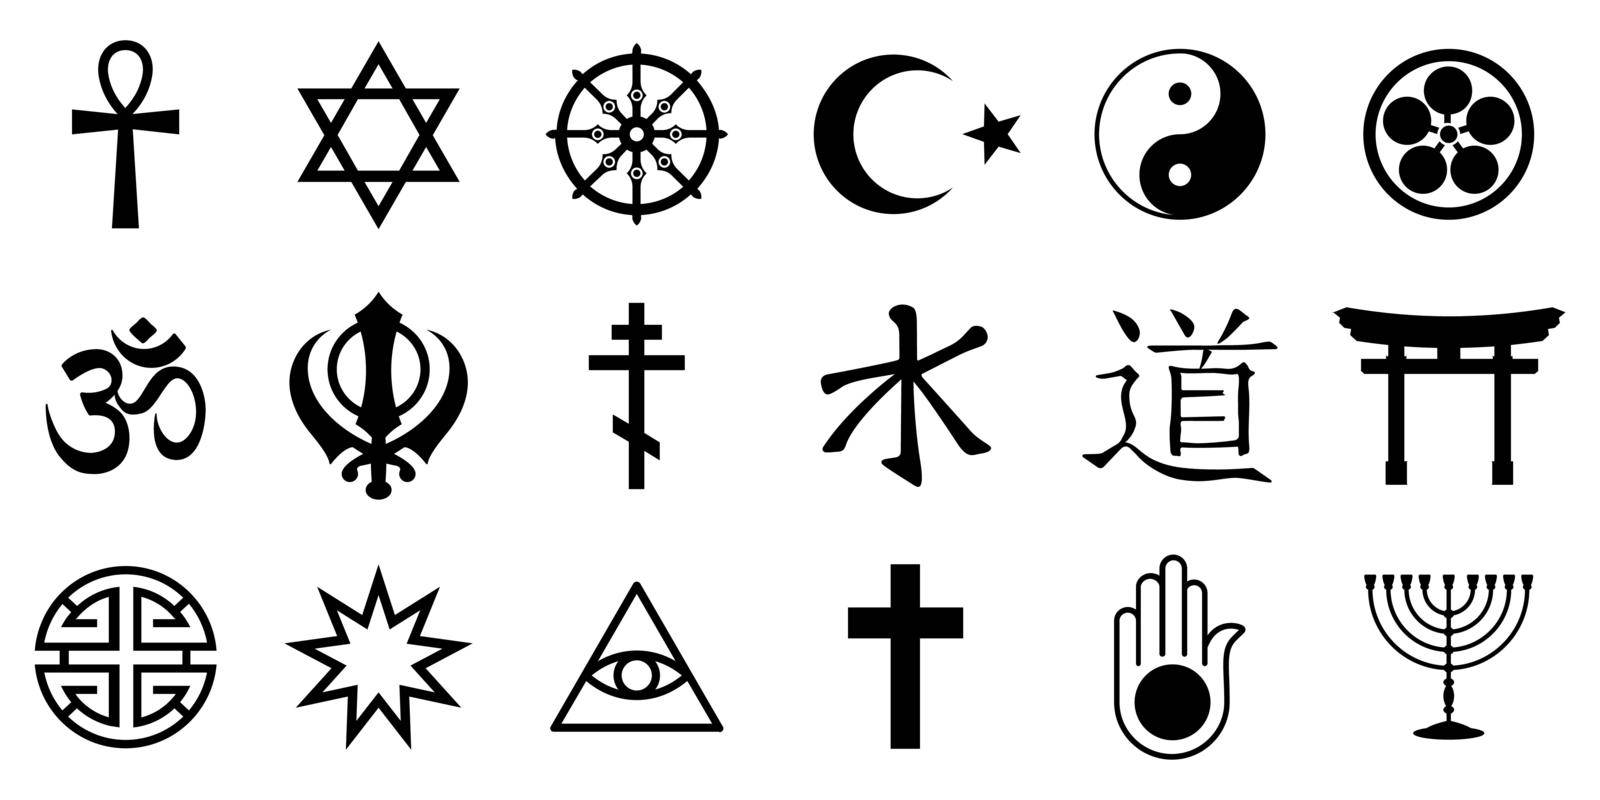 Religious symbols. Set of miscellaneous religious icons. Black vector illustration. by Chekman